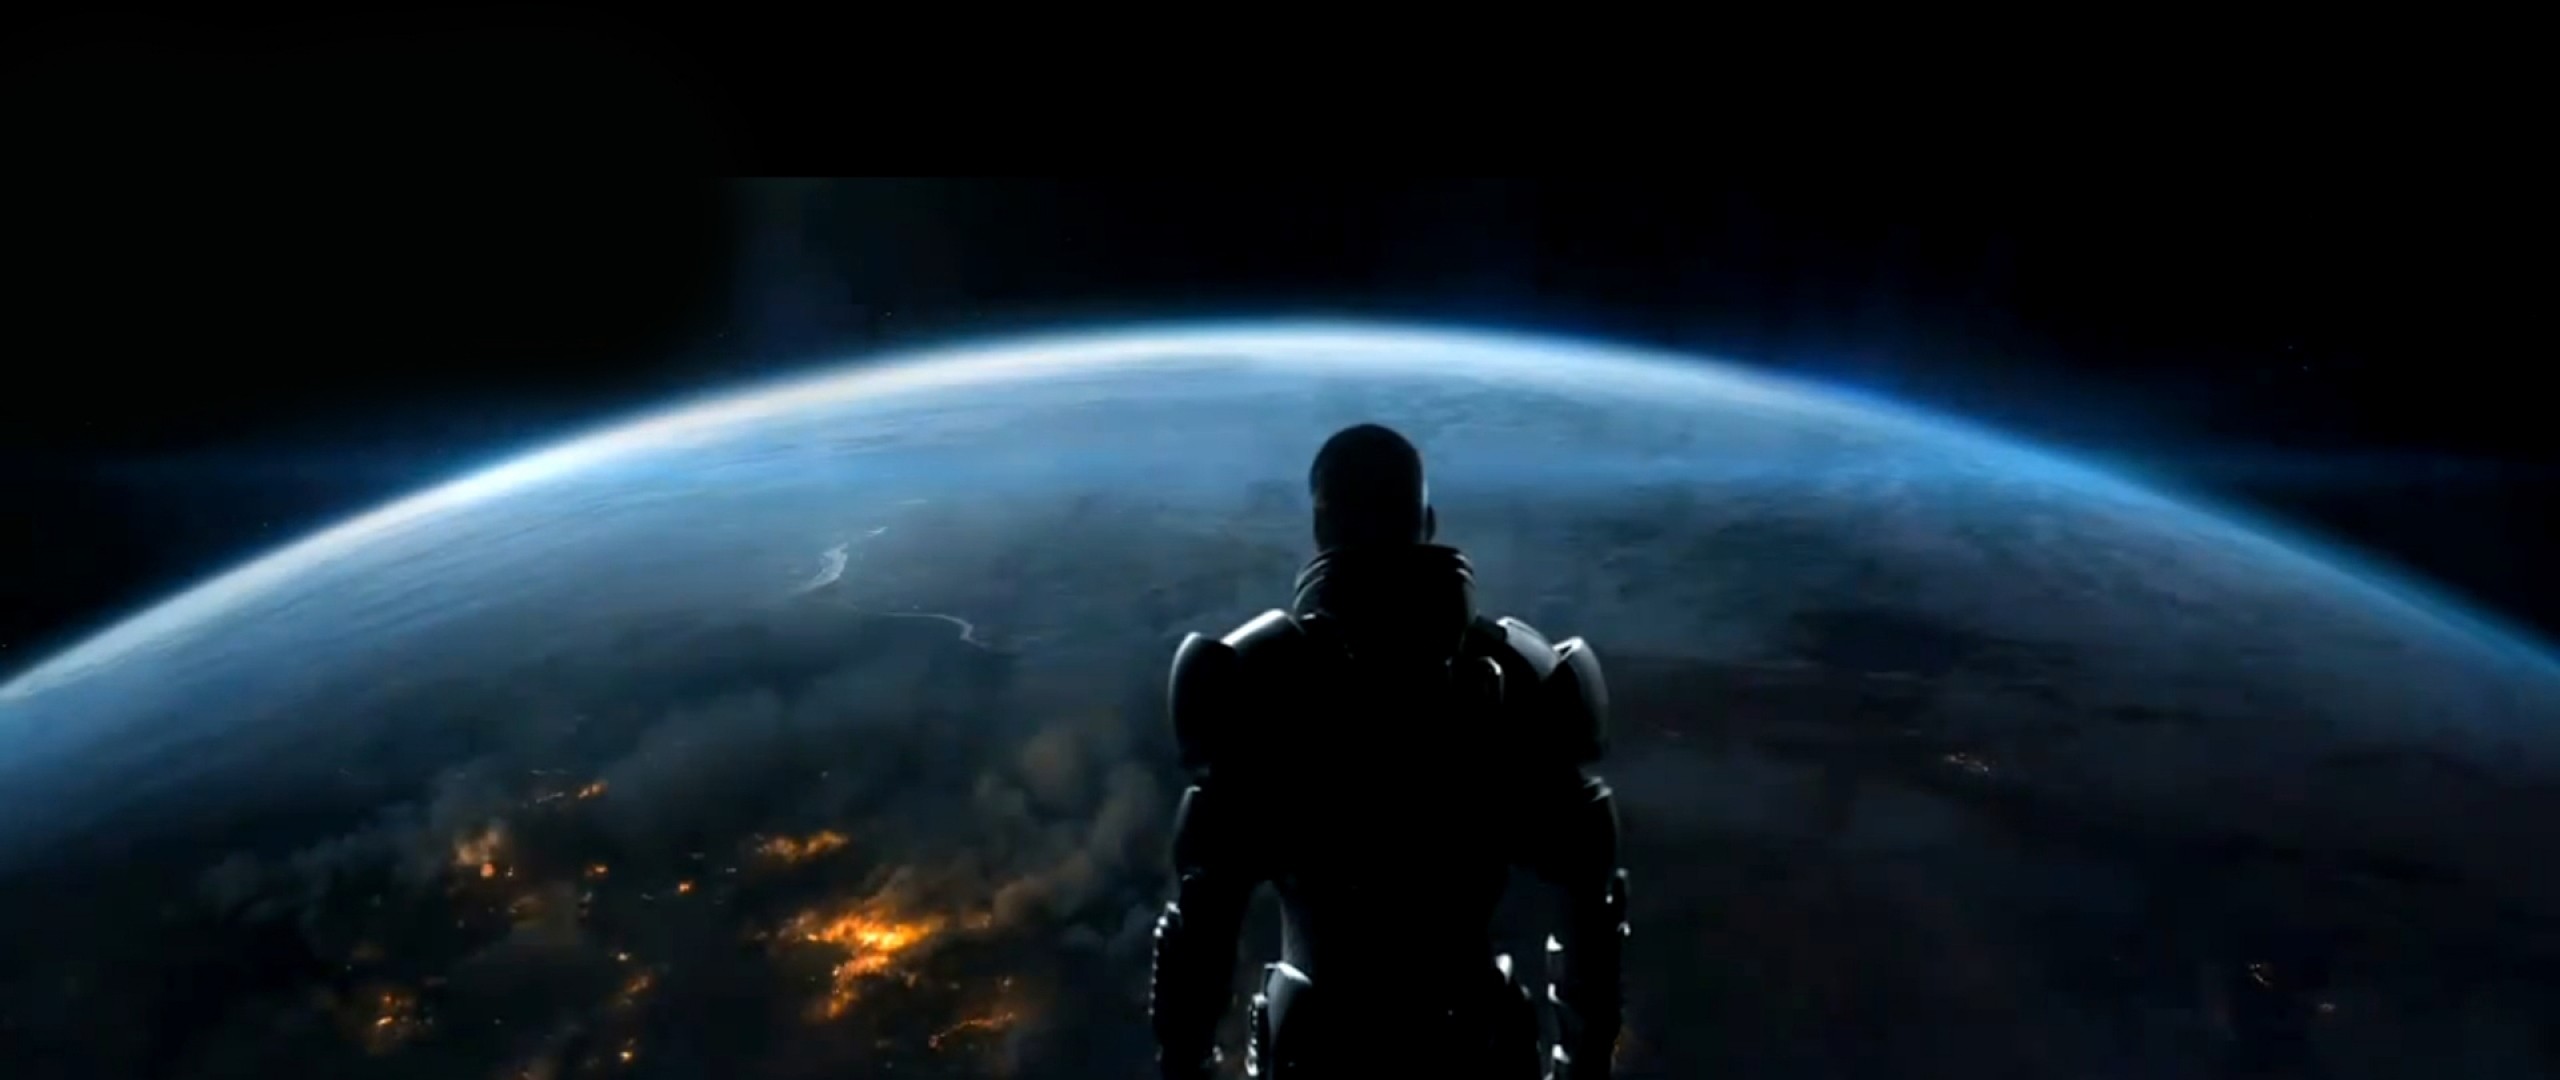 Mass Effect 3 Desktop Background 82 Images